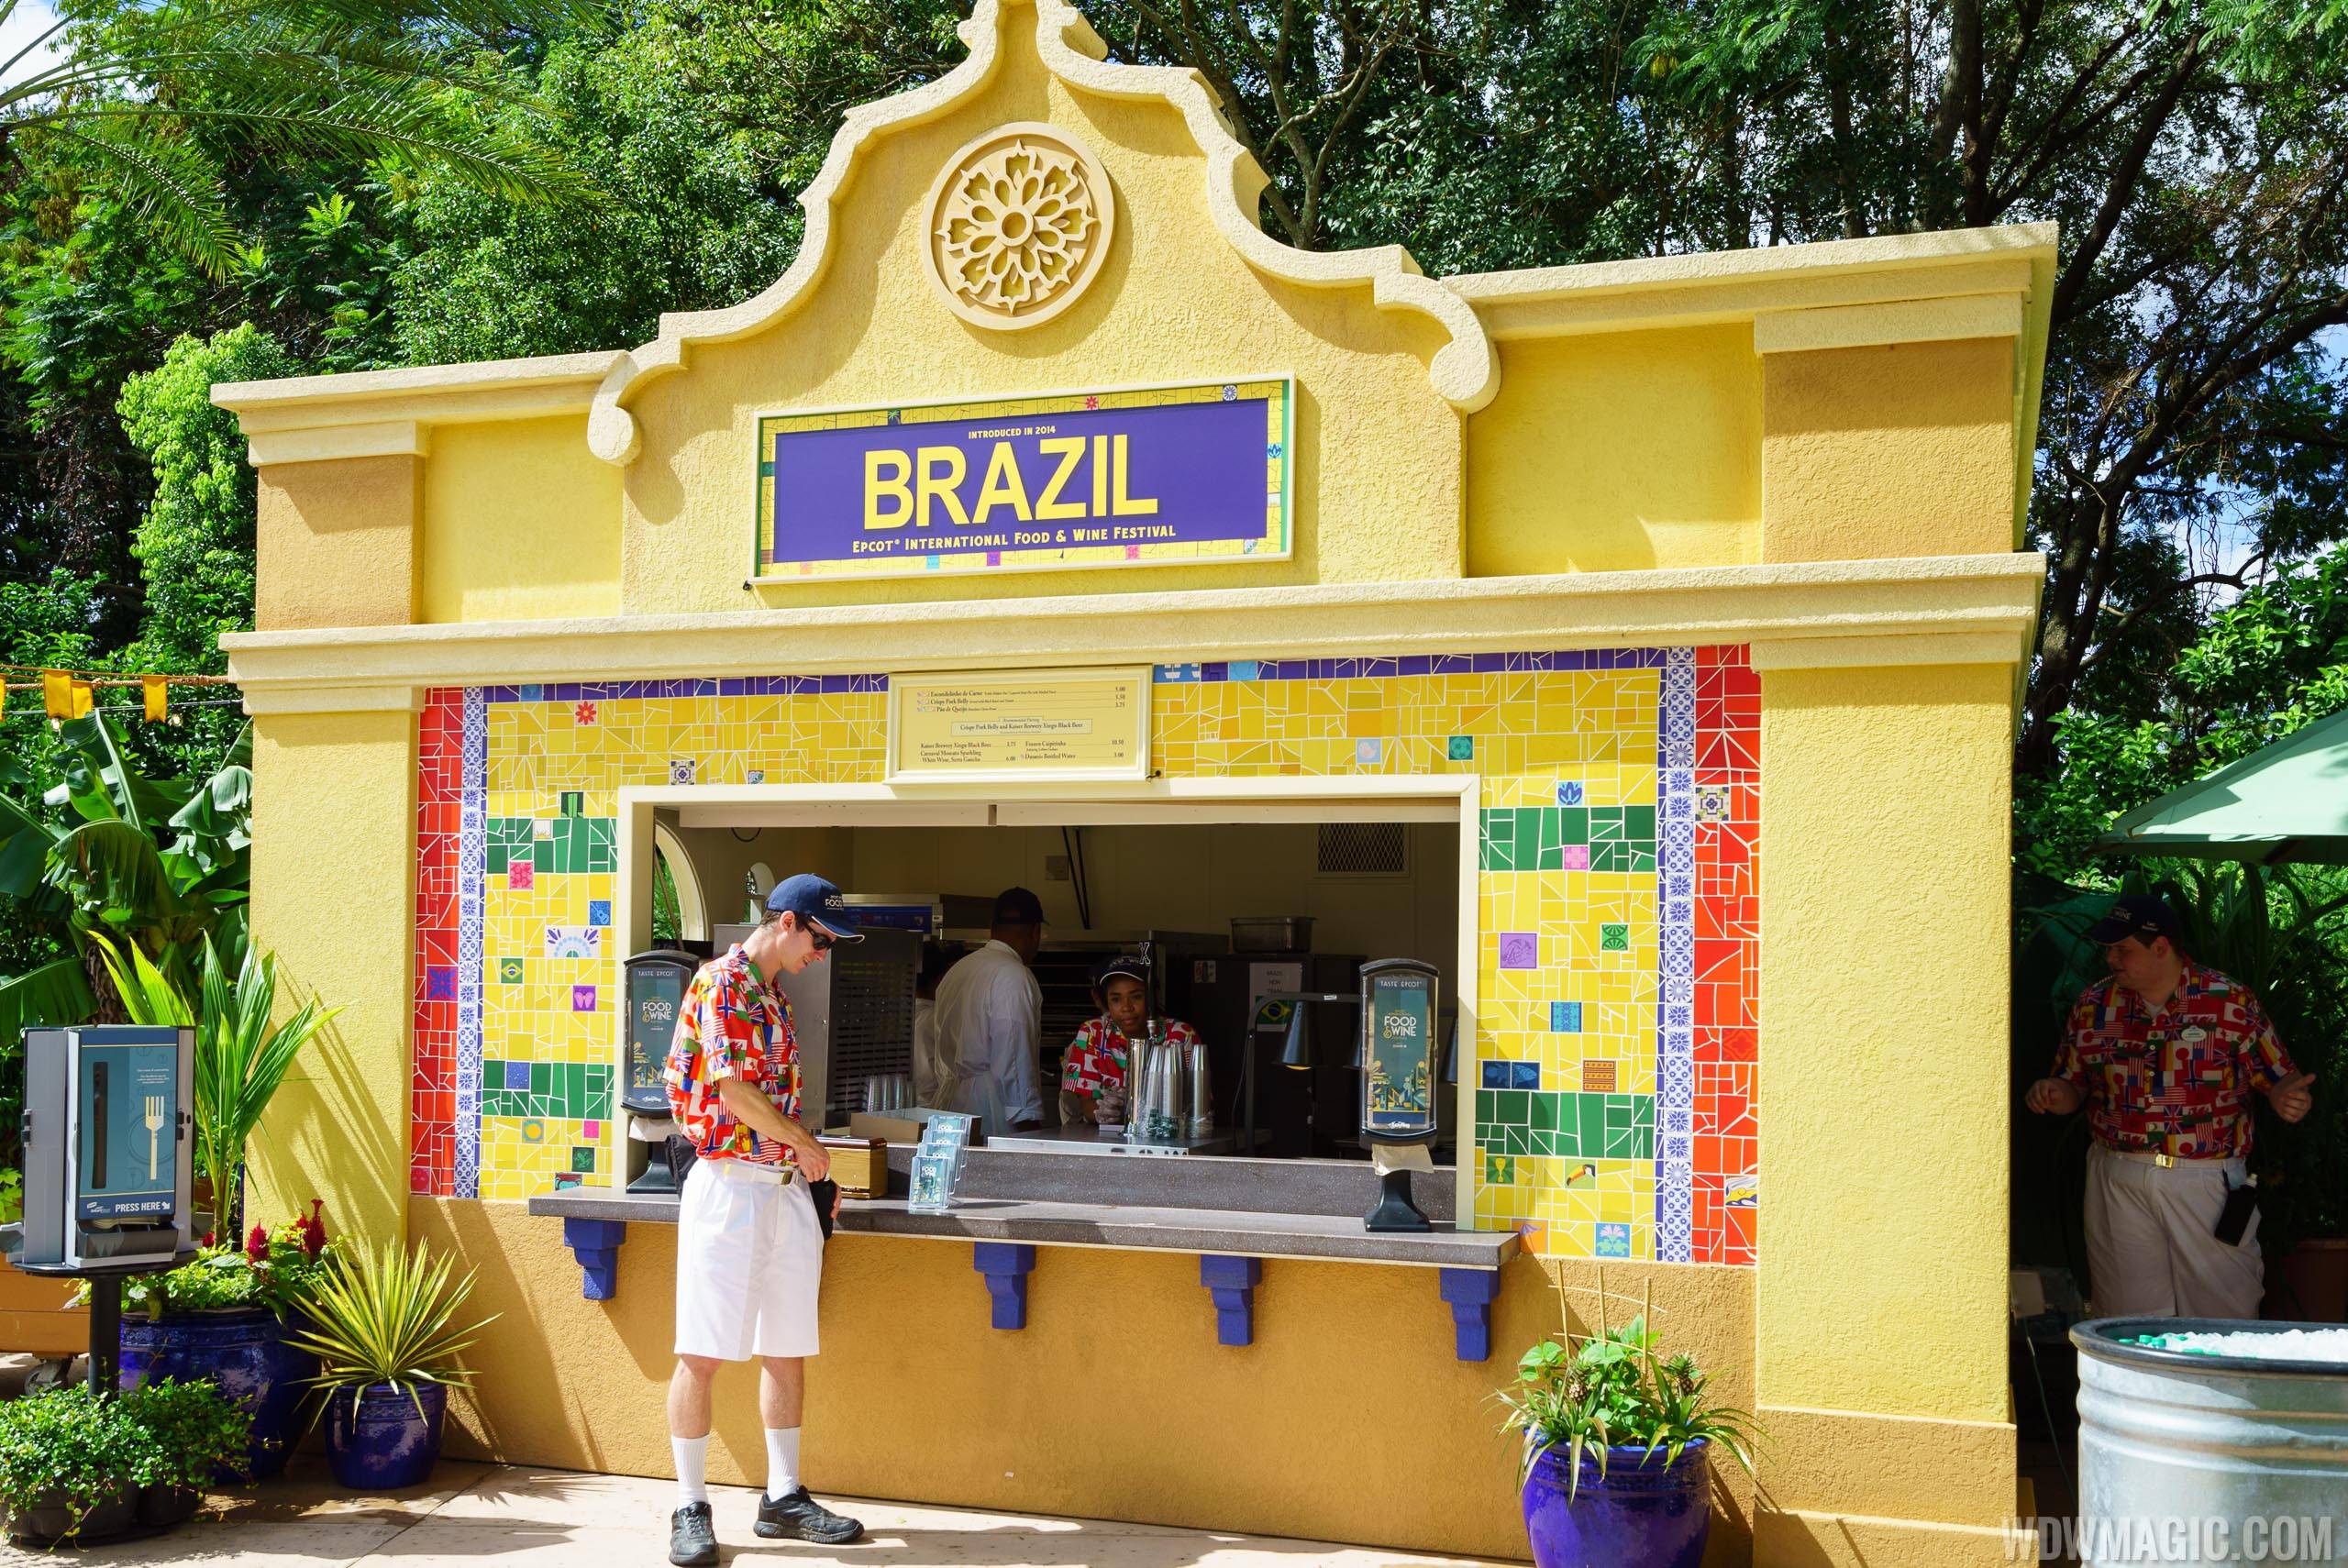 2016 Epcot Food and Wine Festival - Brazil kiosk